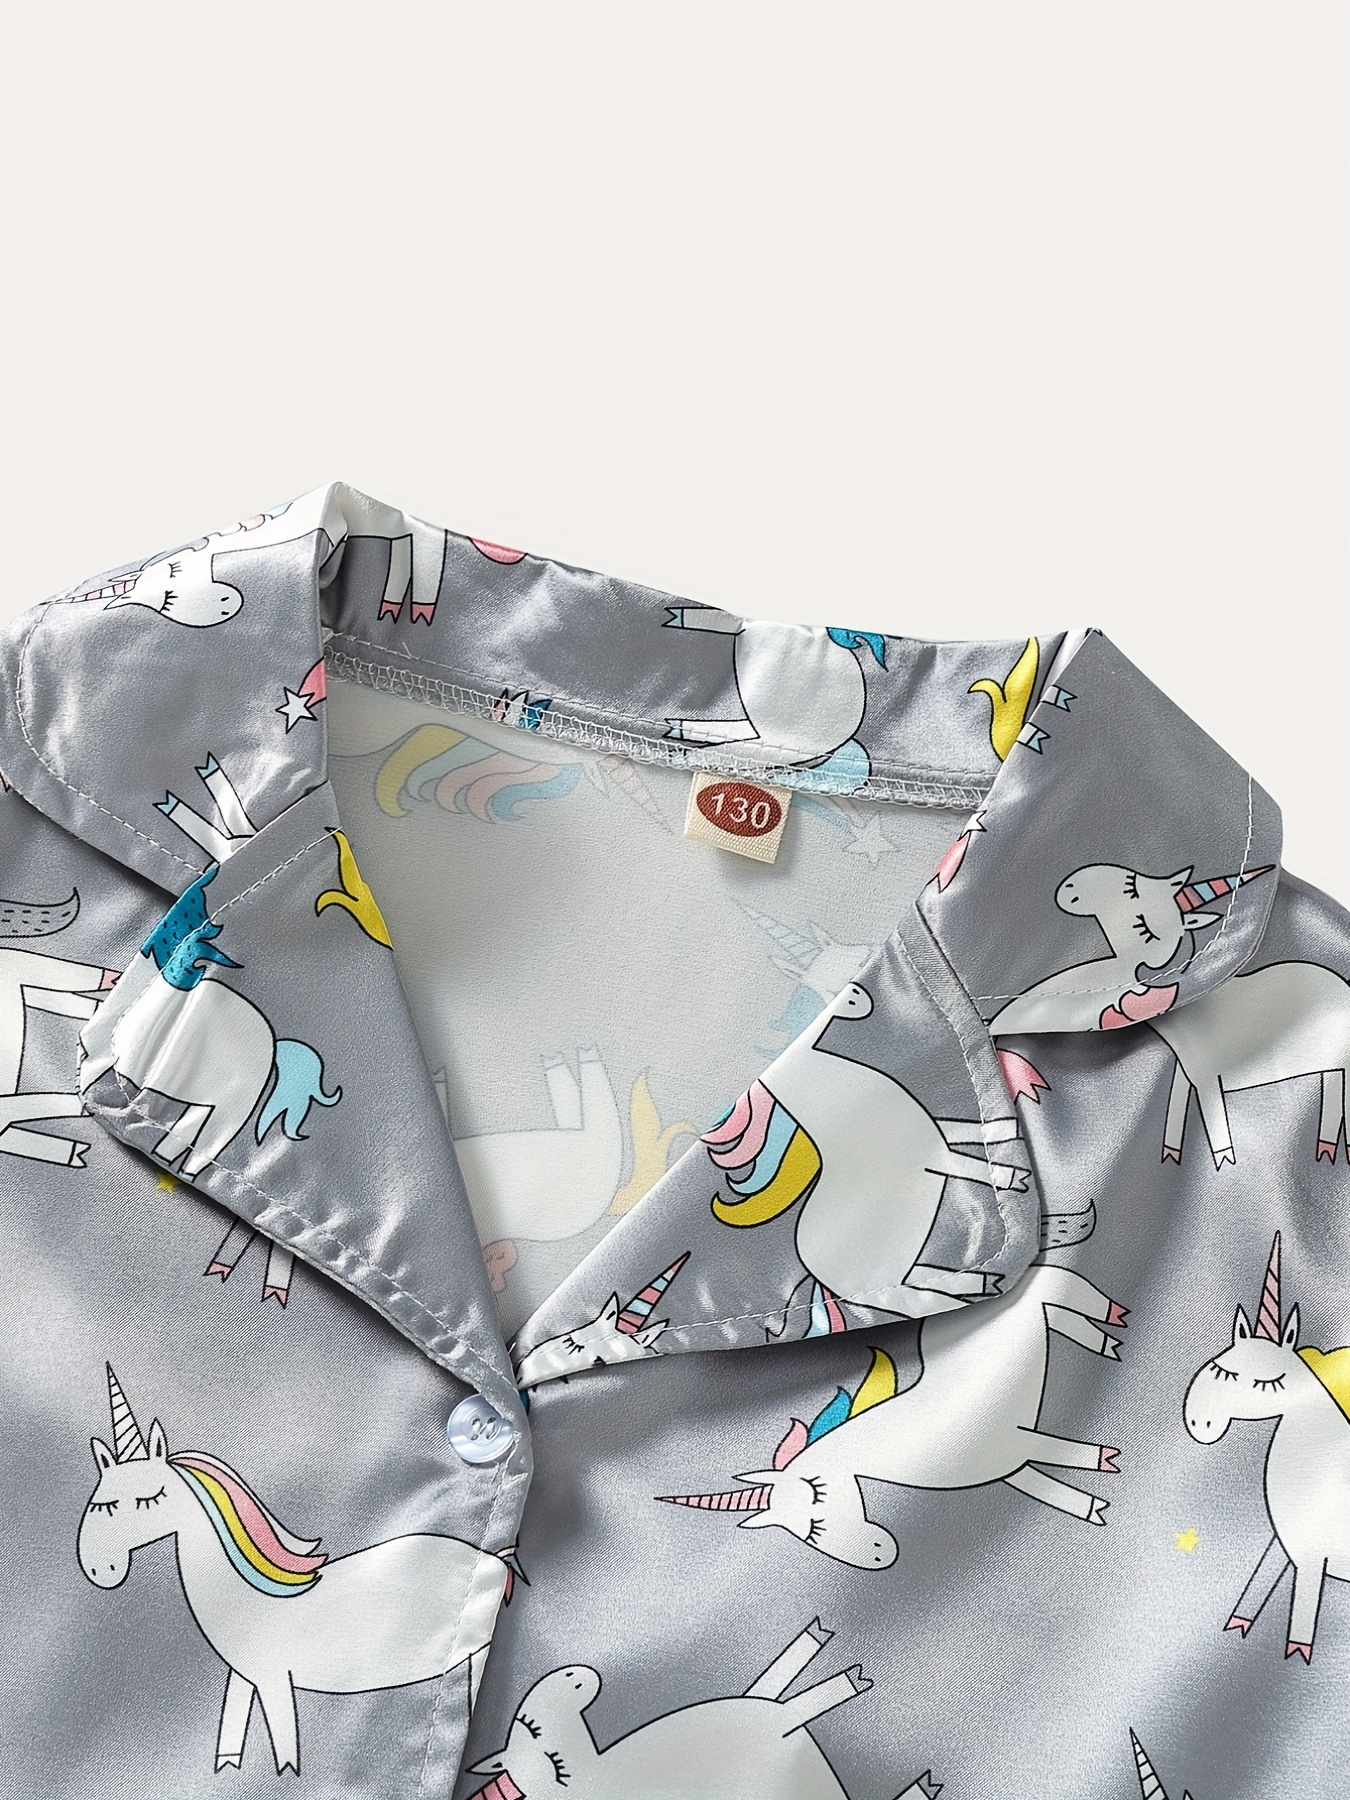 Multi Rainbow Unicorn Stars Print Loungewear Sleepwear Pyjama Bottoms Pants